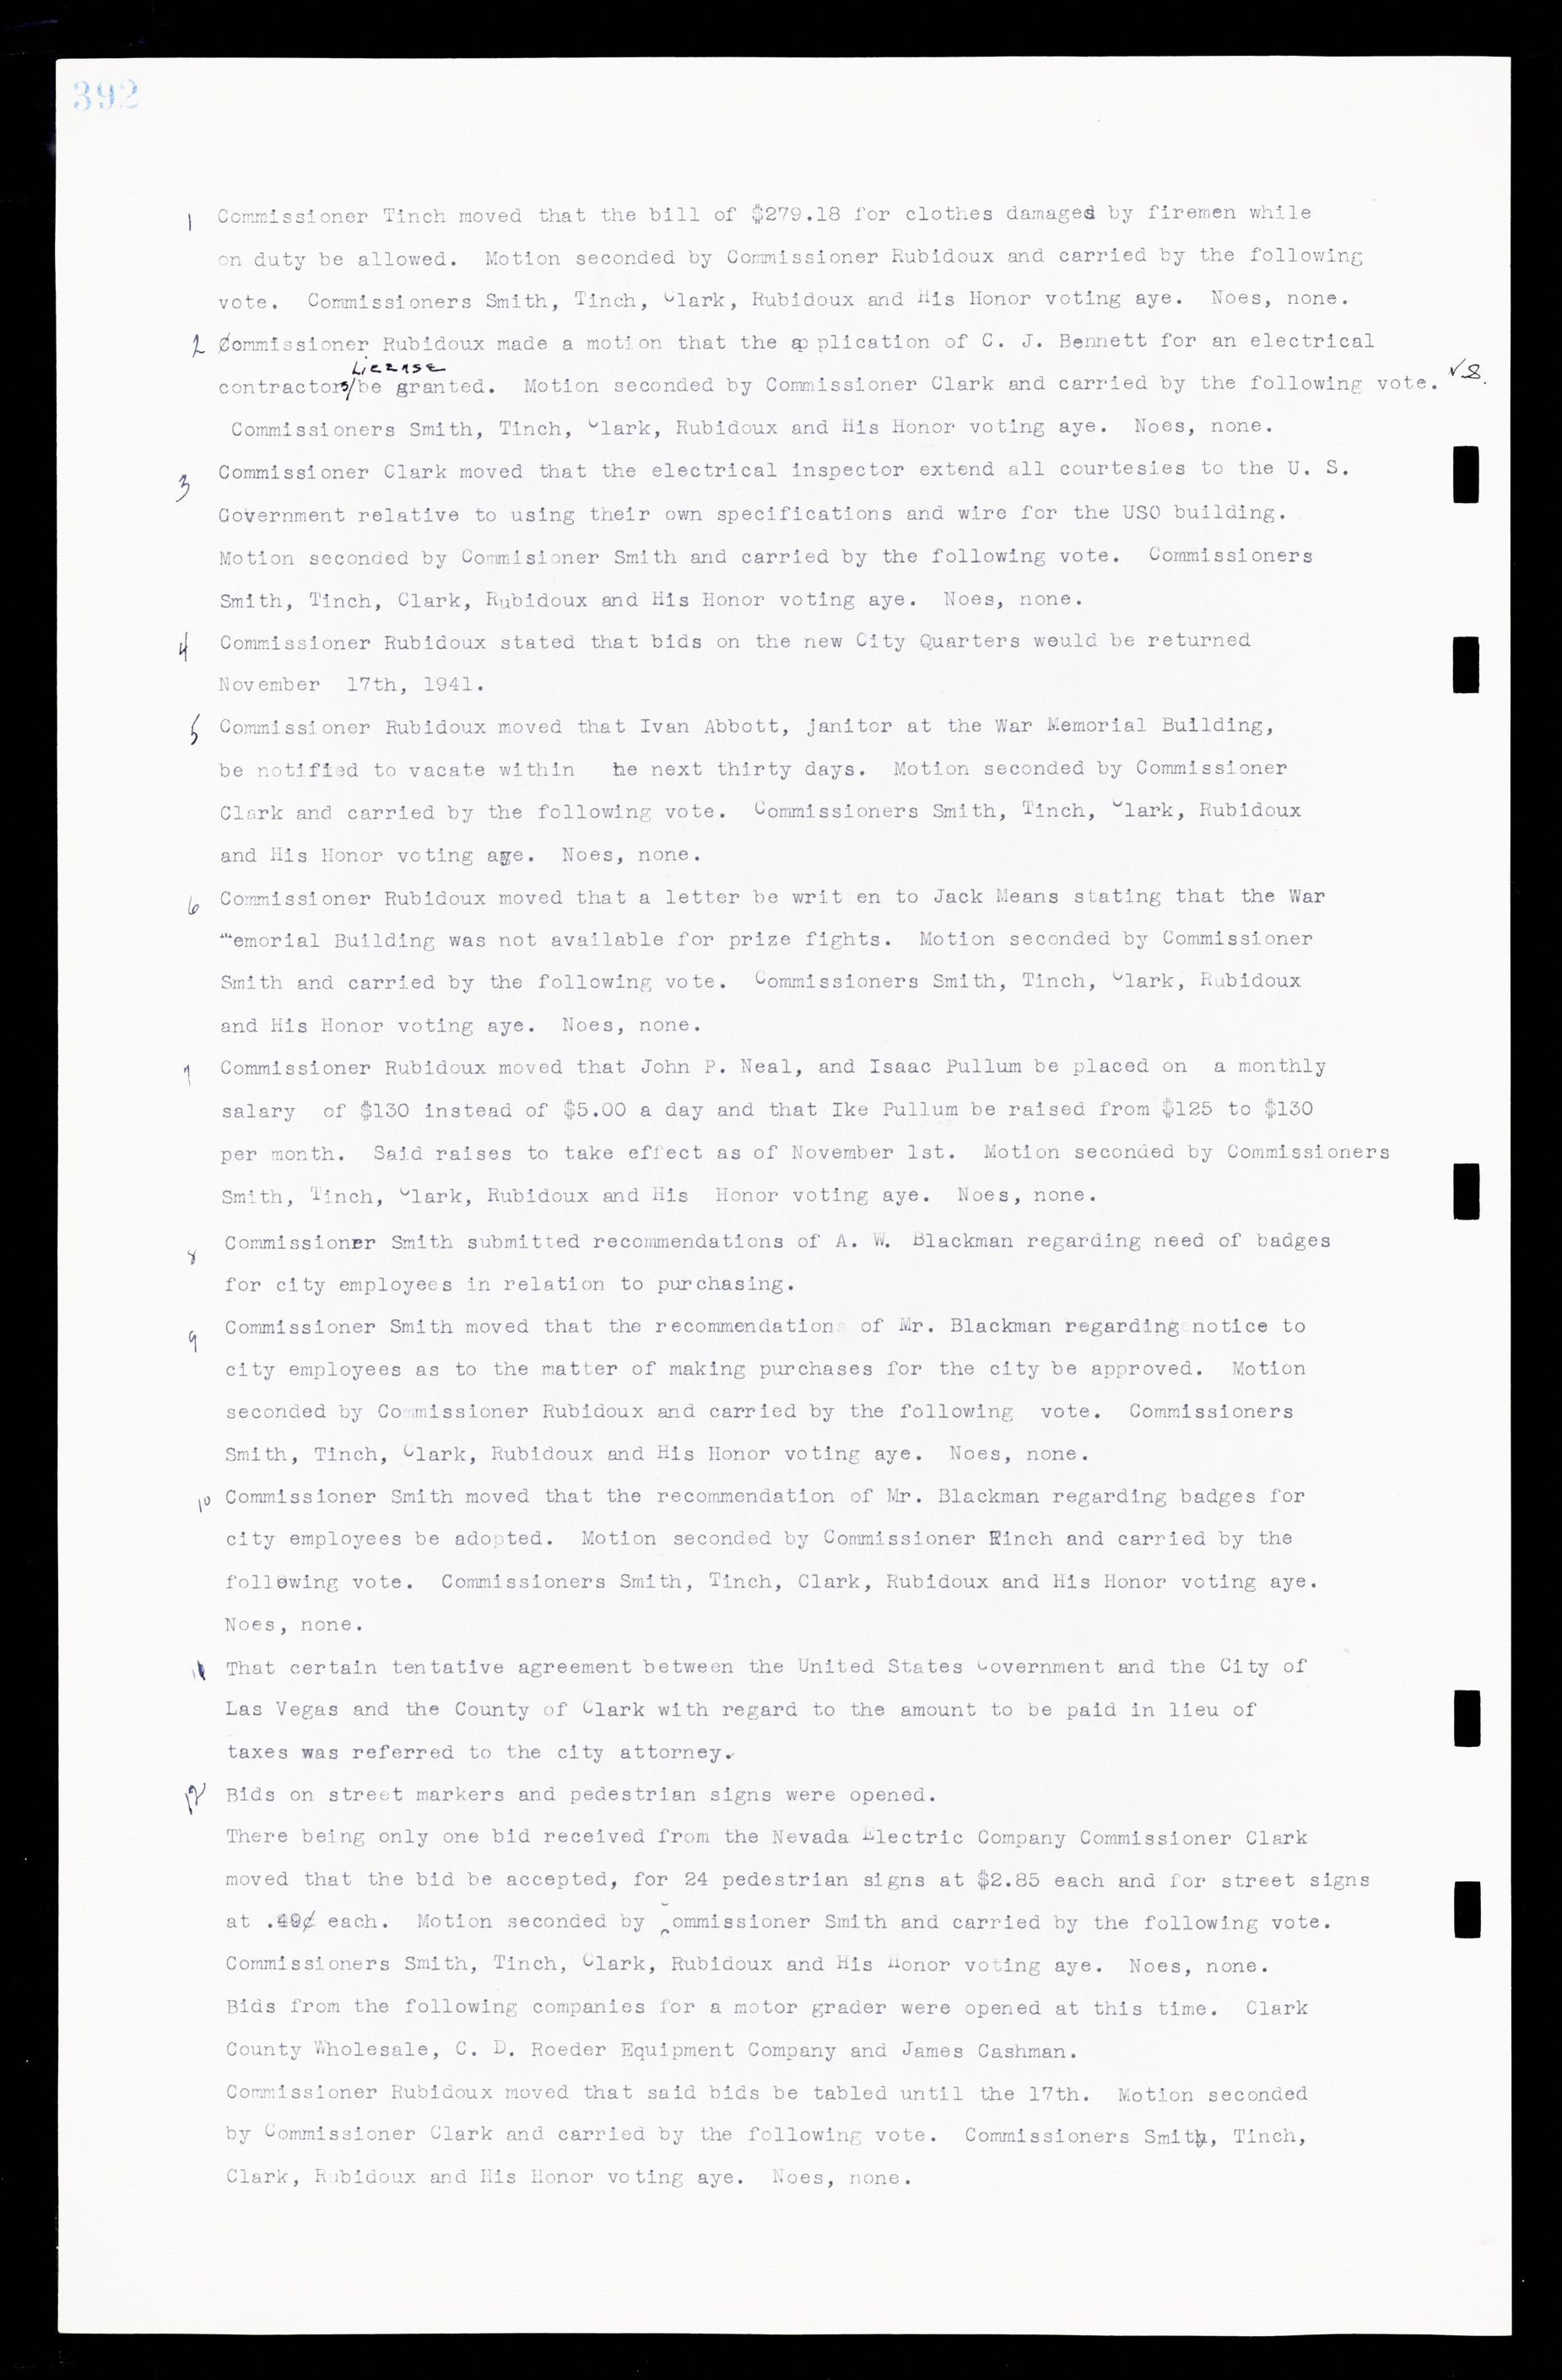 Las Vegas City Commission Minutes, February 17, 1937 to August 4, 1942, lvc000004-418